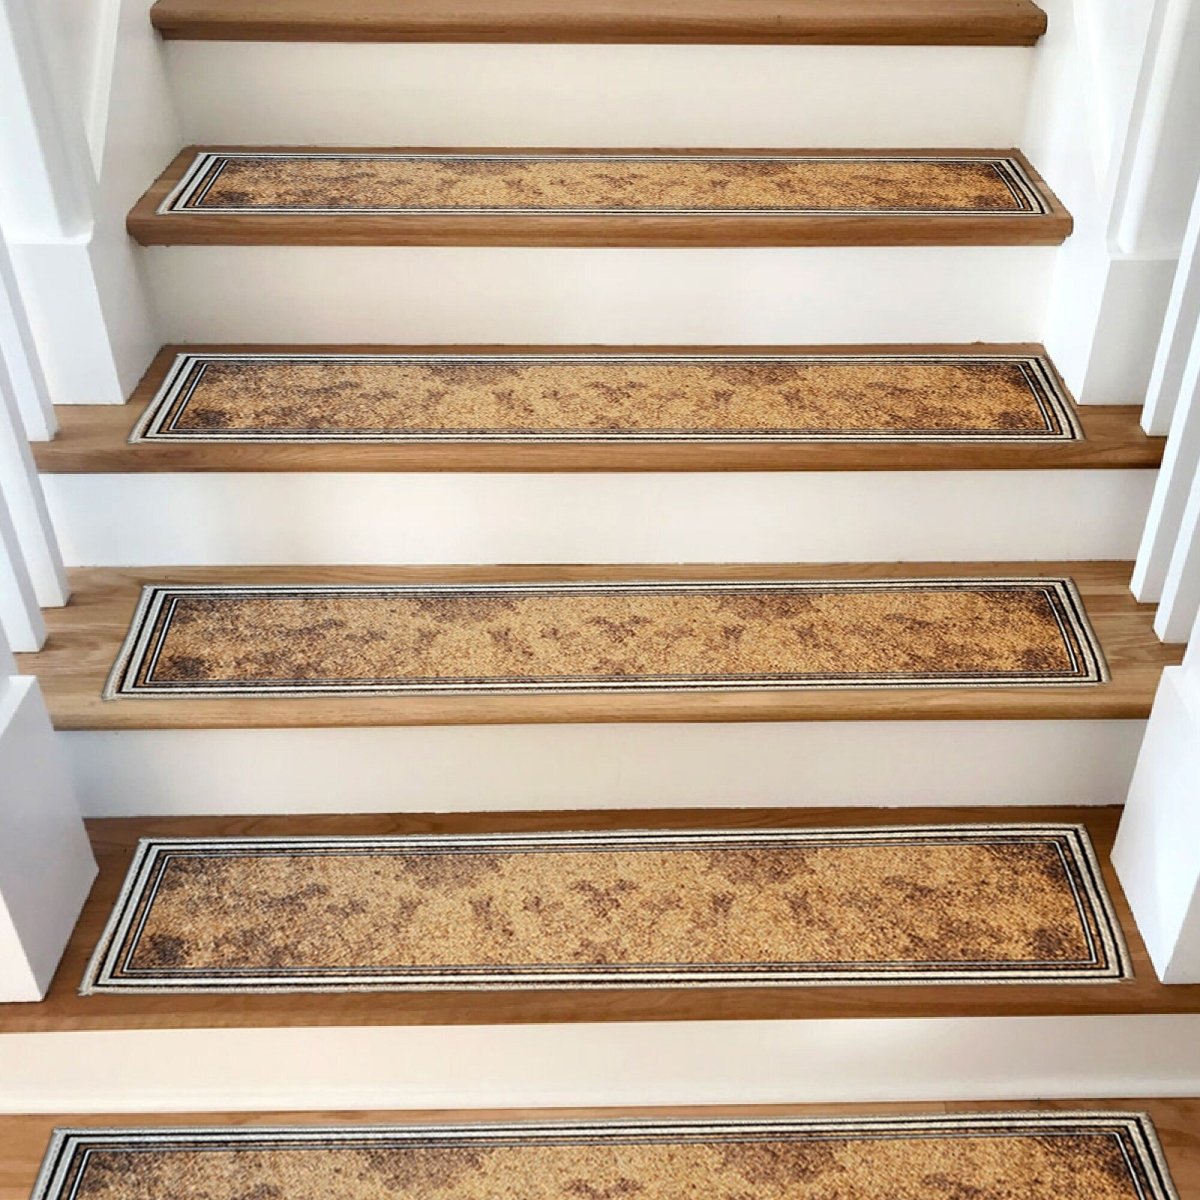 Modern Stair Treads Rug Brown, Stair Carpet, Aesthetic Stair Runner, Ultra Thin Stair Mat, Step Pad, Non-Slip Rug, Washable Carpet - Slips Away - 1672165236_4334524567 -